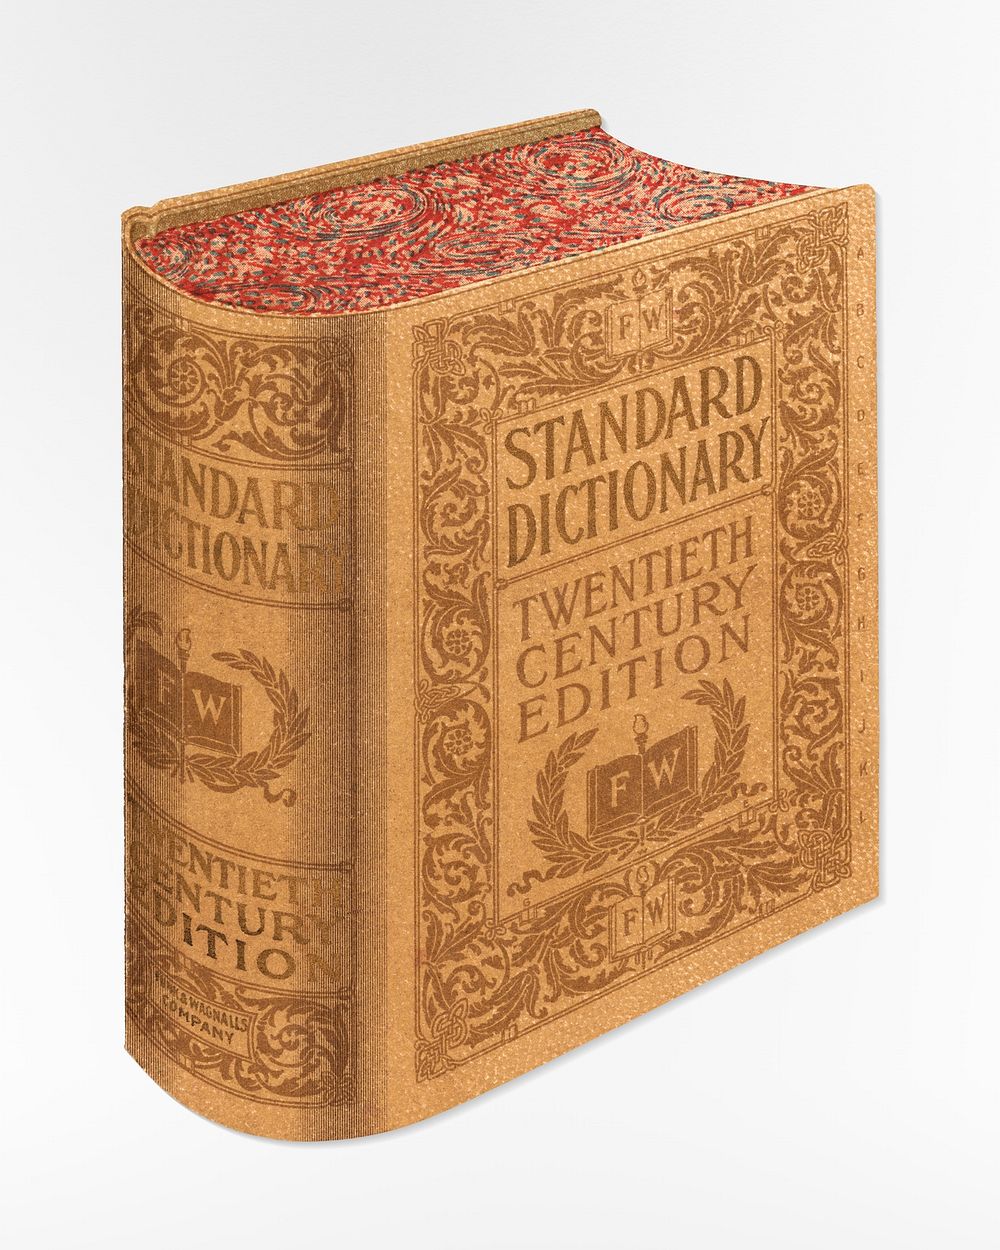 Standard Dictionary, twentieth century edition (1870&ndash;1900) chromolithograph art by Funk & Wagnalls Company. Original…